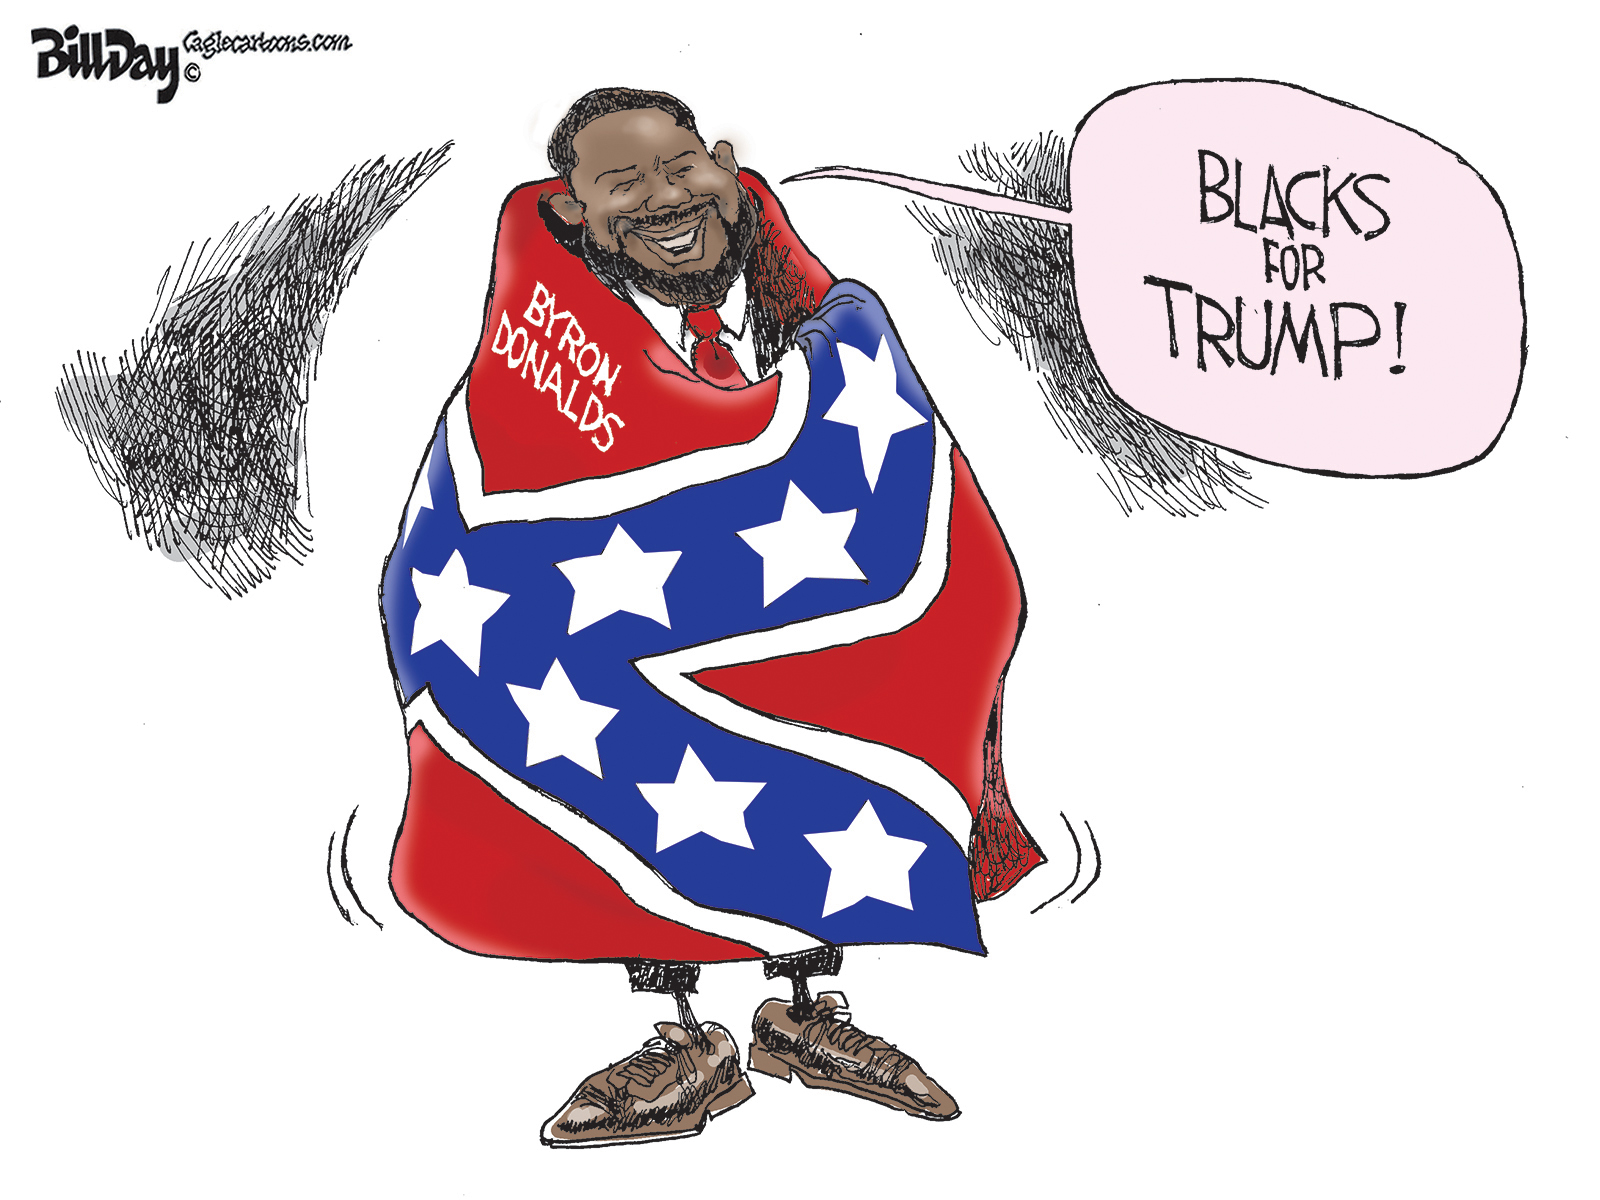 Blacks for Trump, A Cartoon by Award-Winning Bill Day